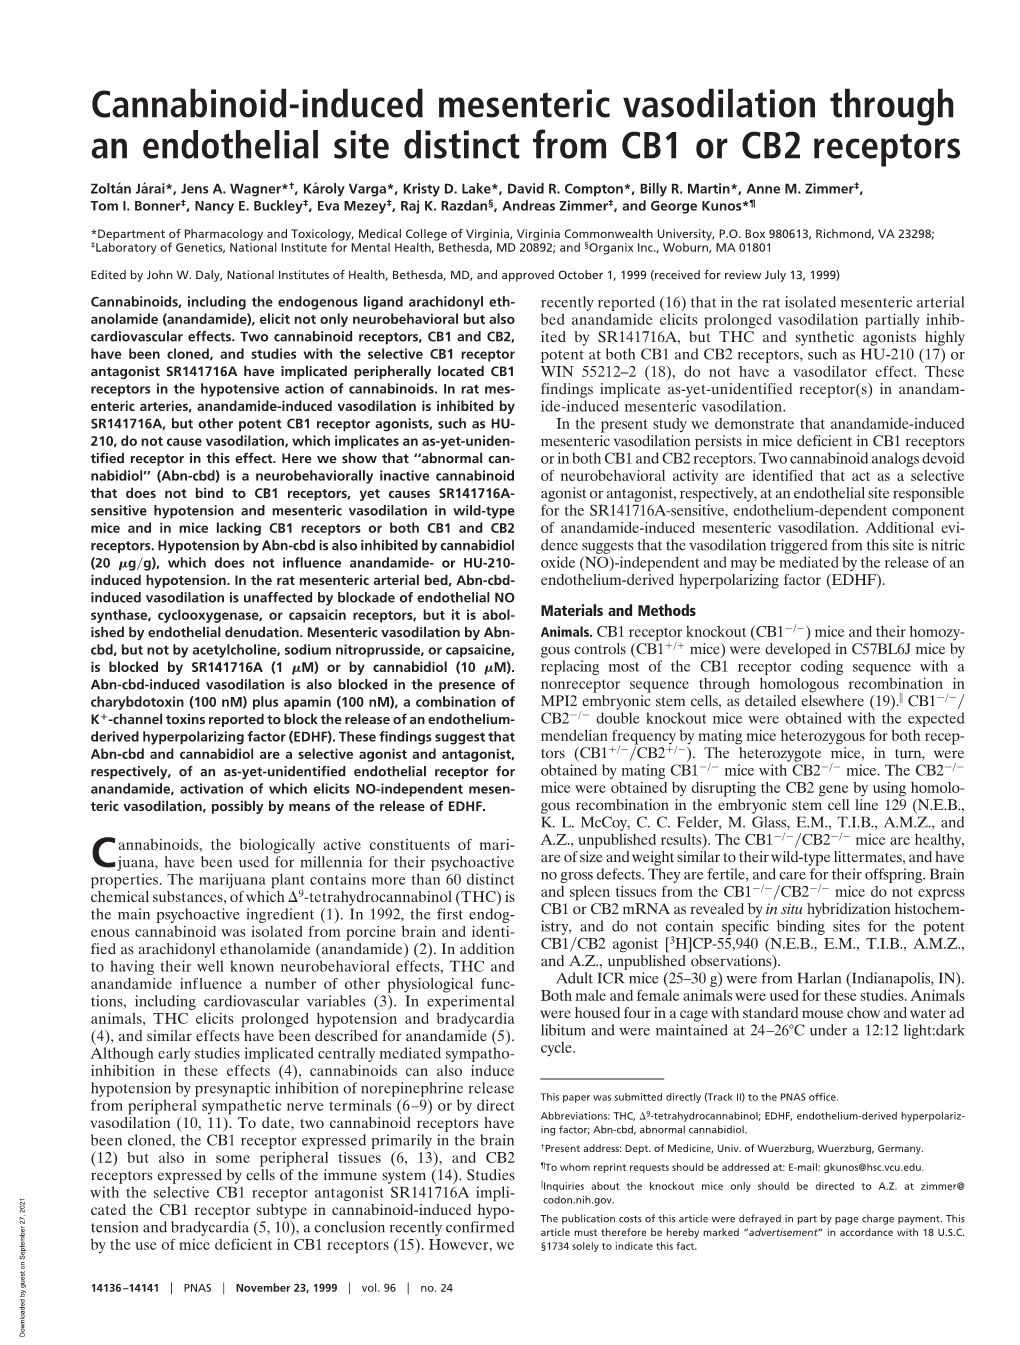 Cannabinoid-Induced Mesenteric Vasodilation Through an Endothelial Site Distinct from CB1 Or CB2 Receptors